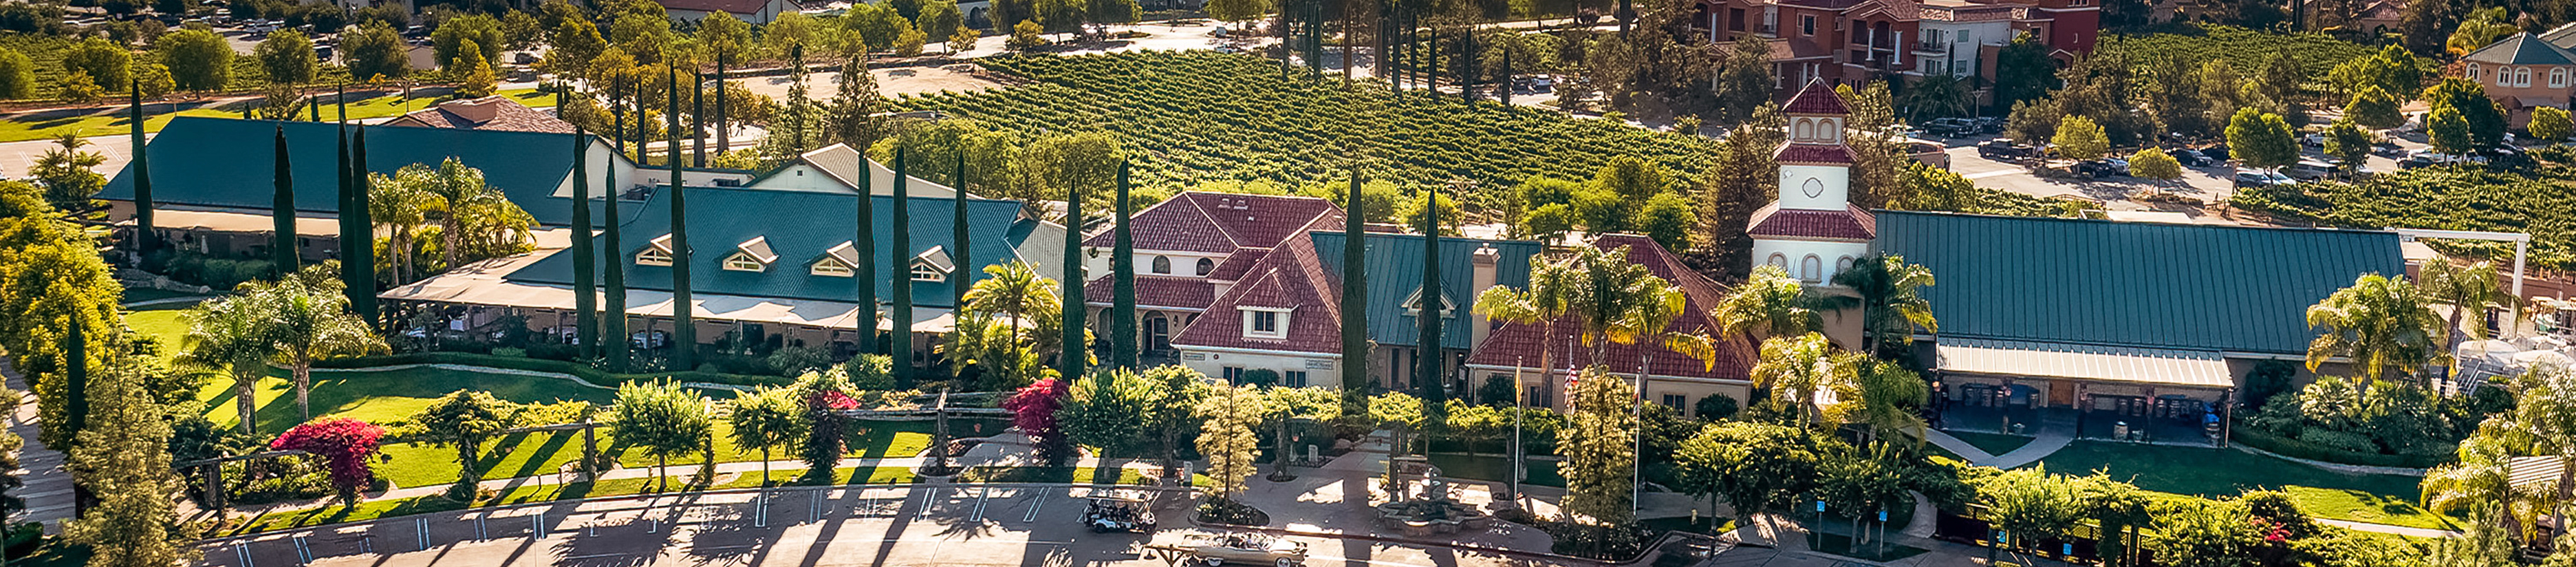 South Coast Winery Resort & Spa,Temecula 2023